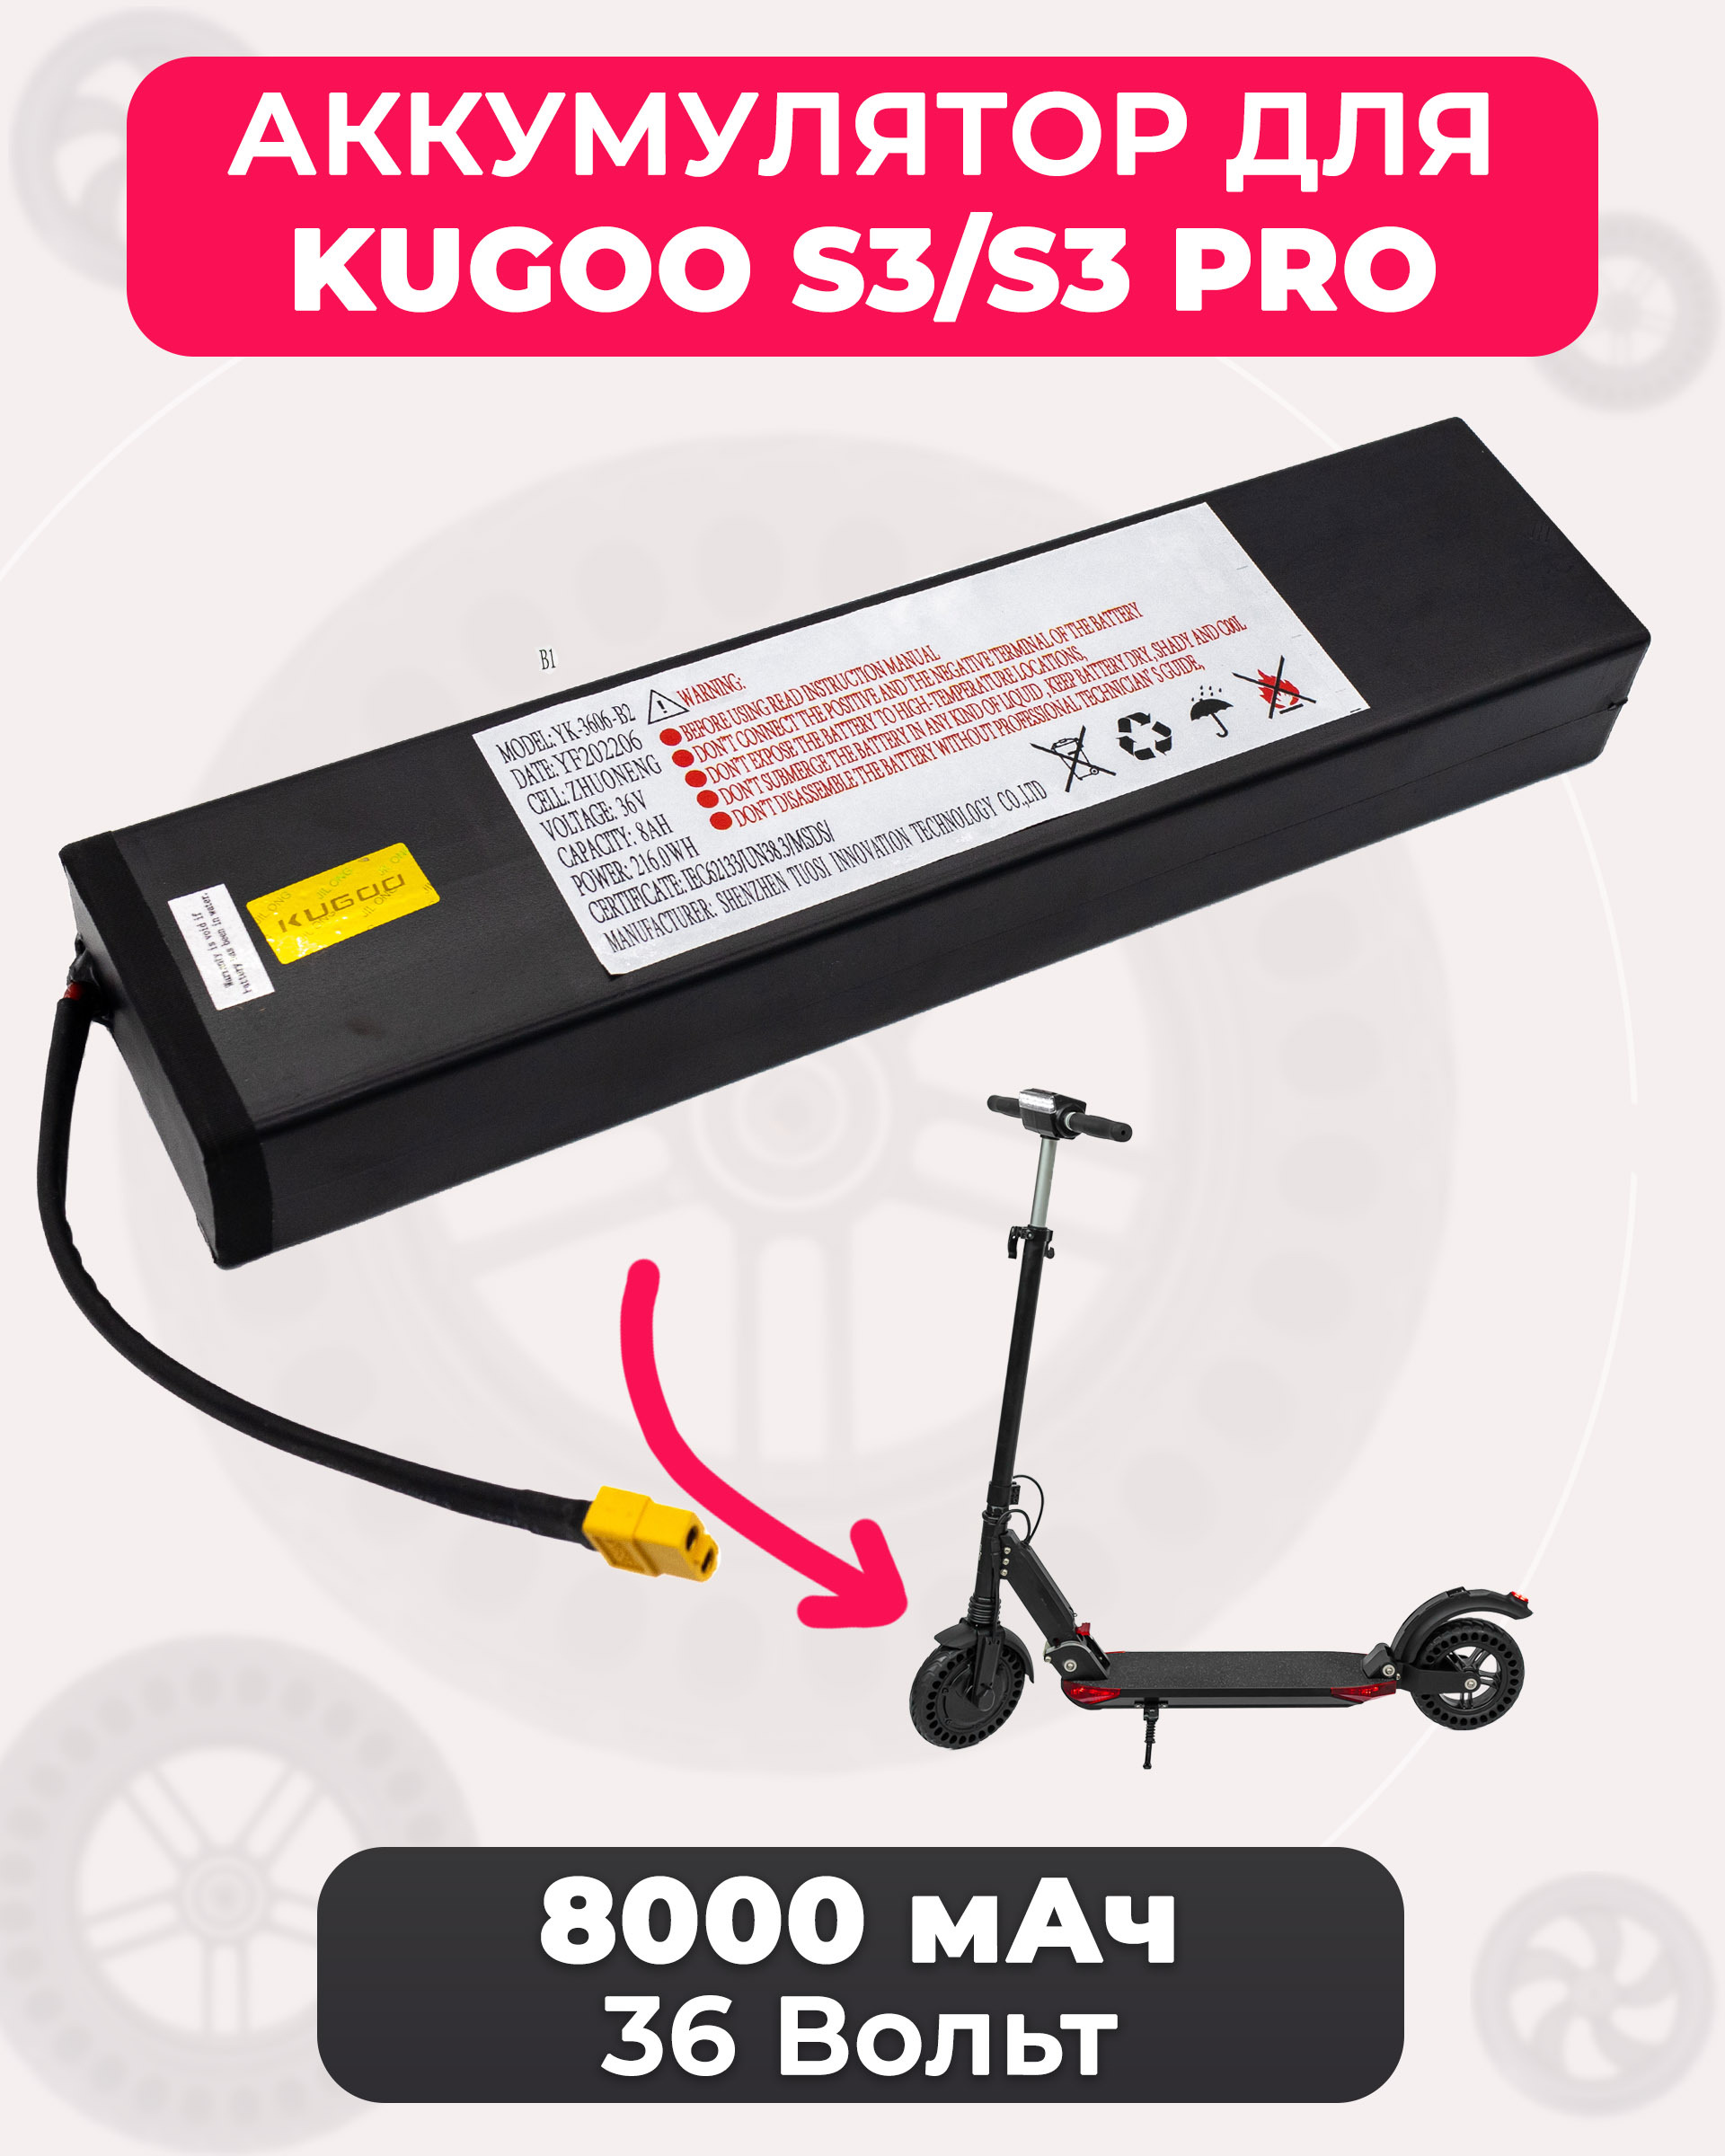 Сколько стоит аккумулятор на электросамокат. Аккумулятор для электросамоката Kugoo s3. Аккумулятор для Kugoo s1. S1 Pro Kugoo АКБ. PLESON аккумулятор Kugoo s1.